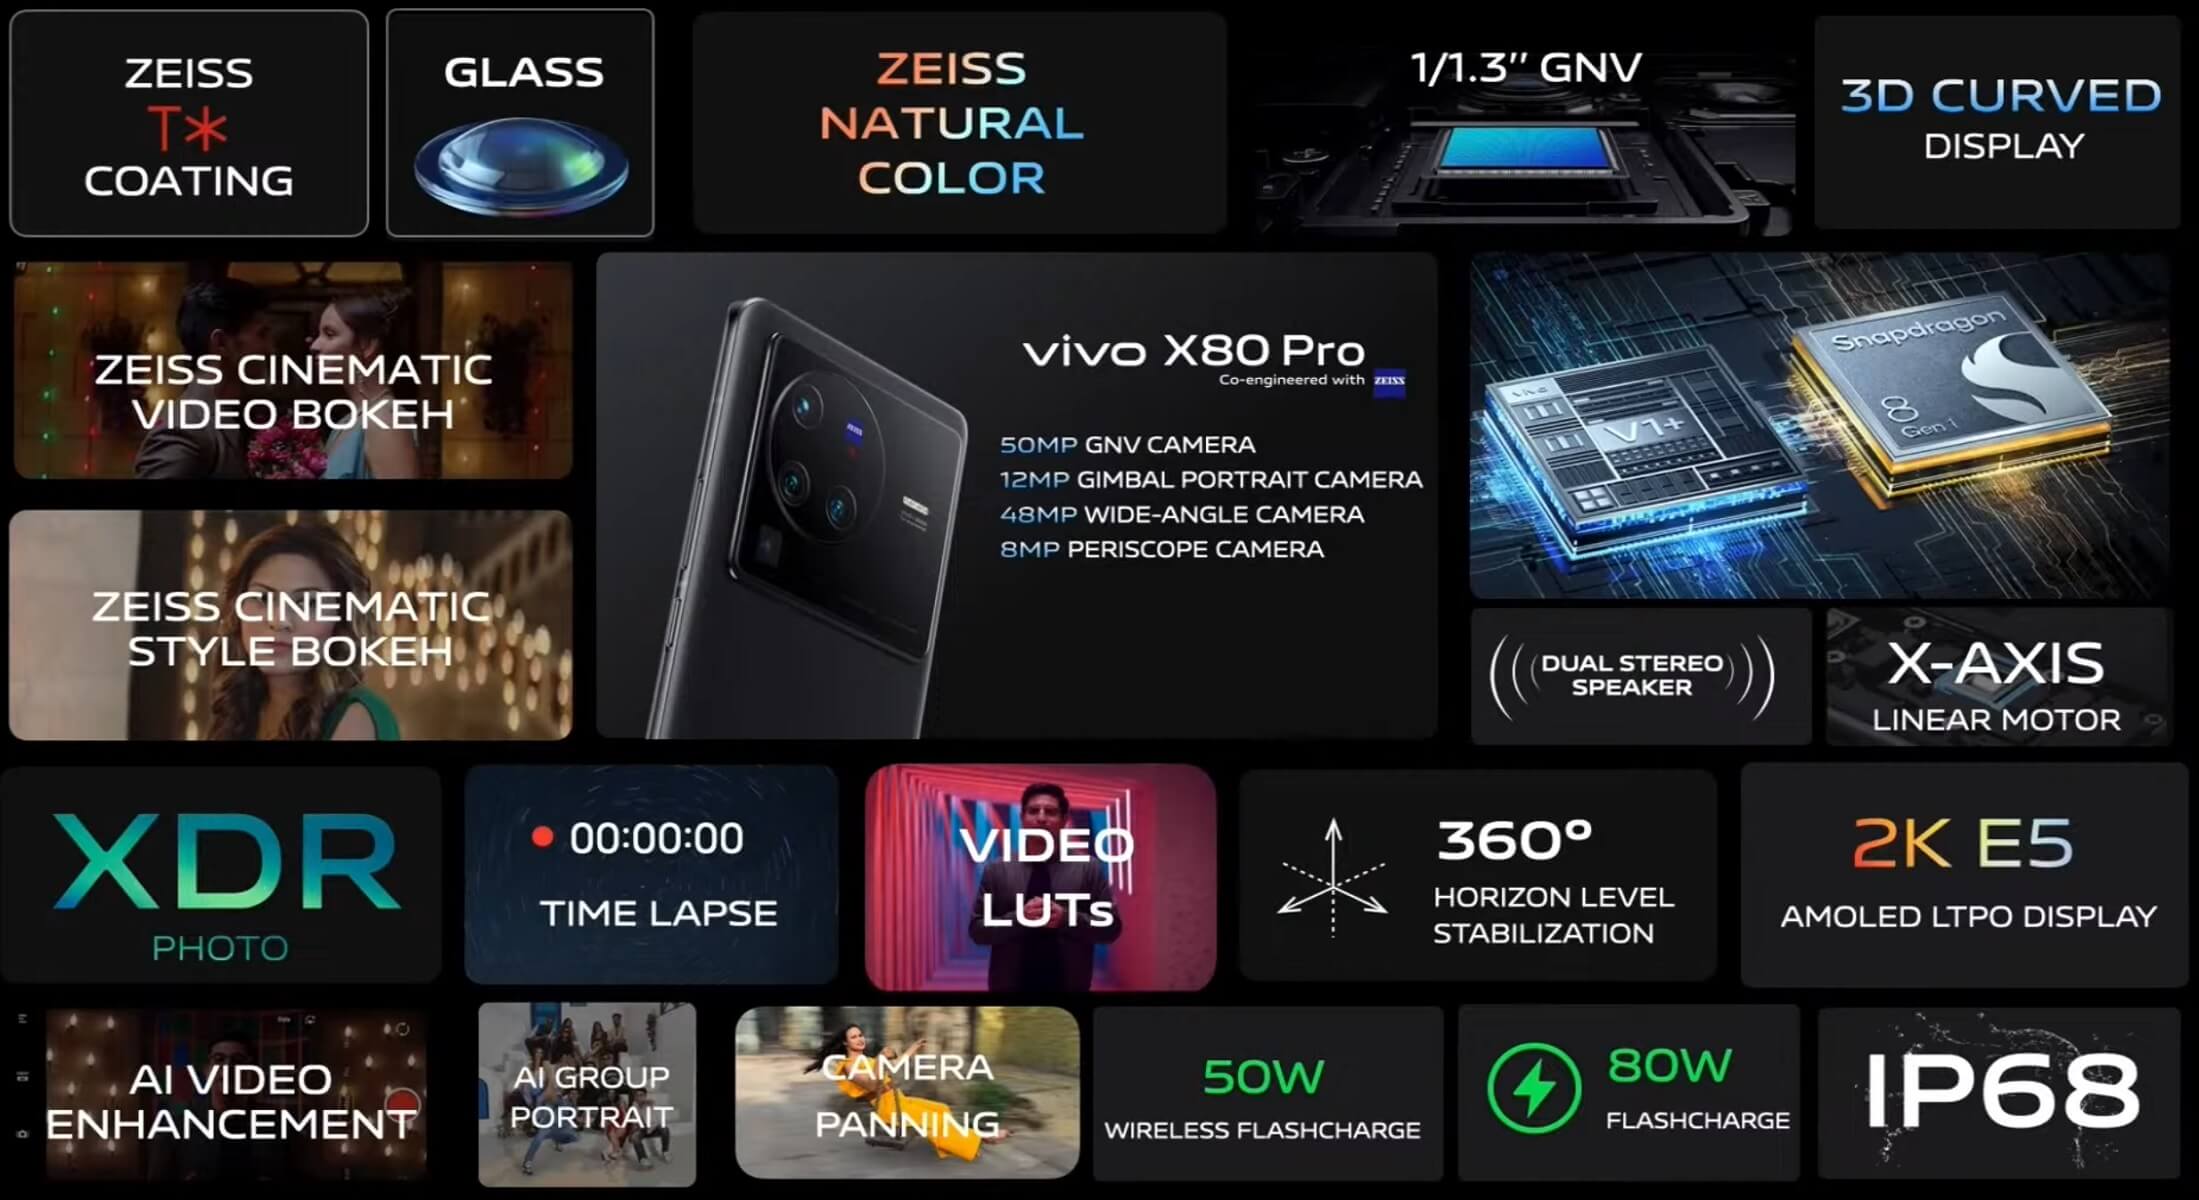 Vivo X80 Pro features India